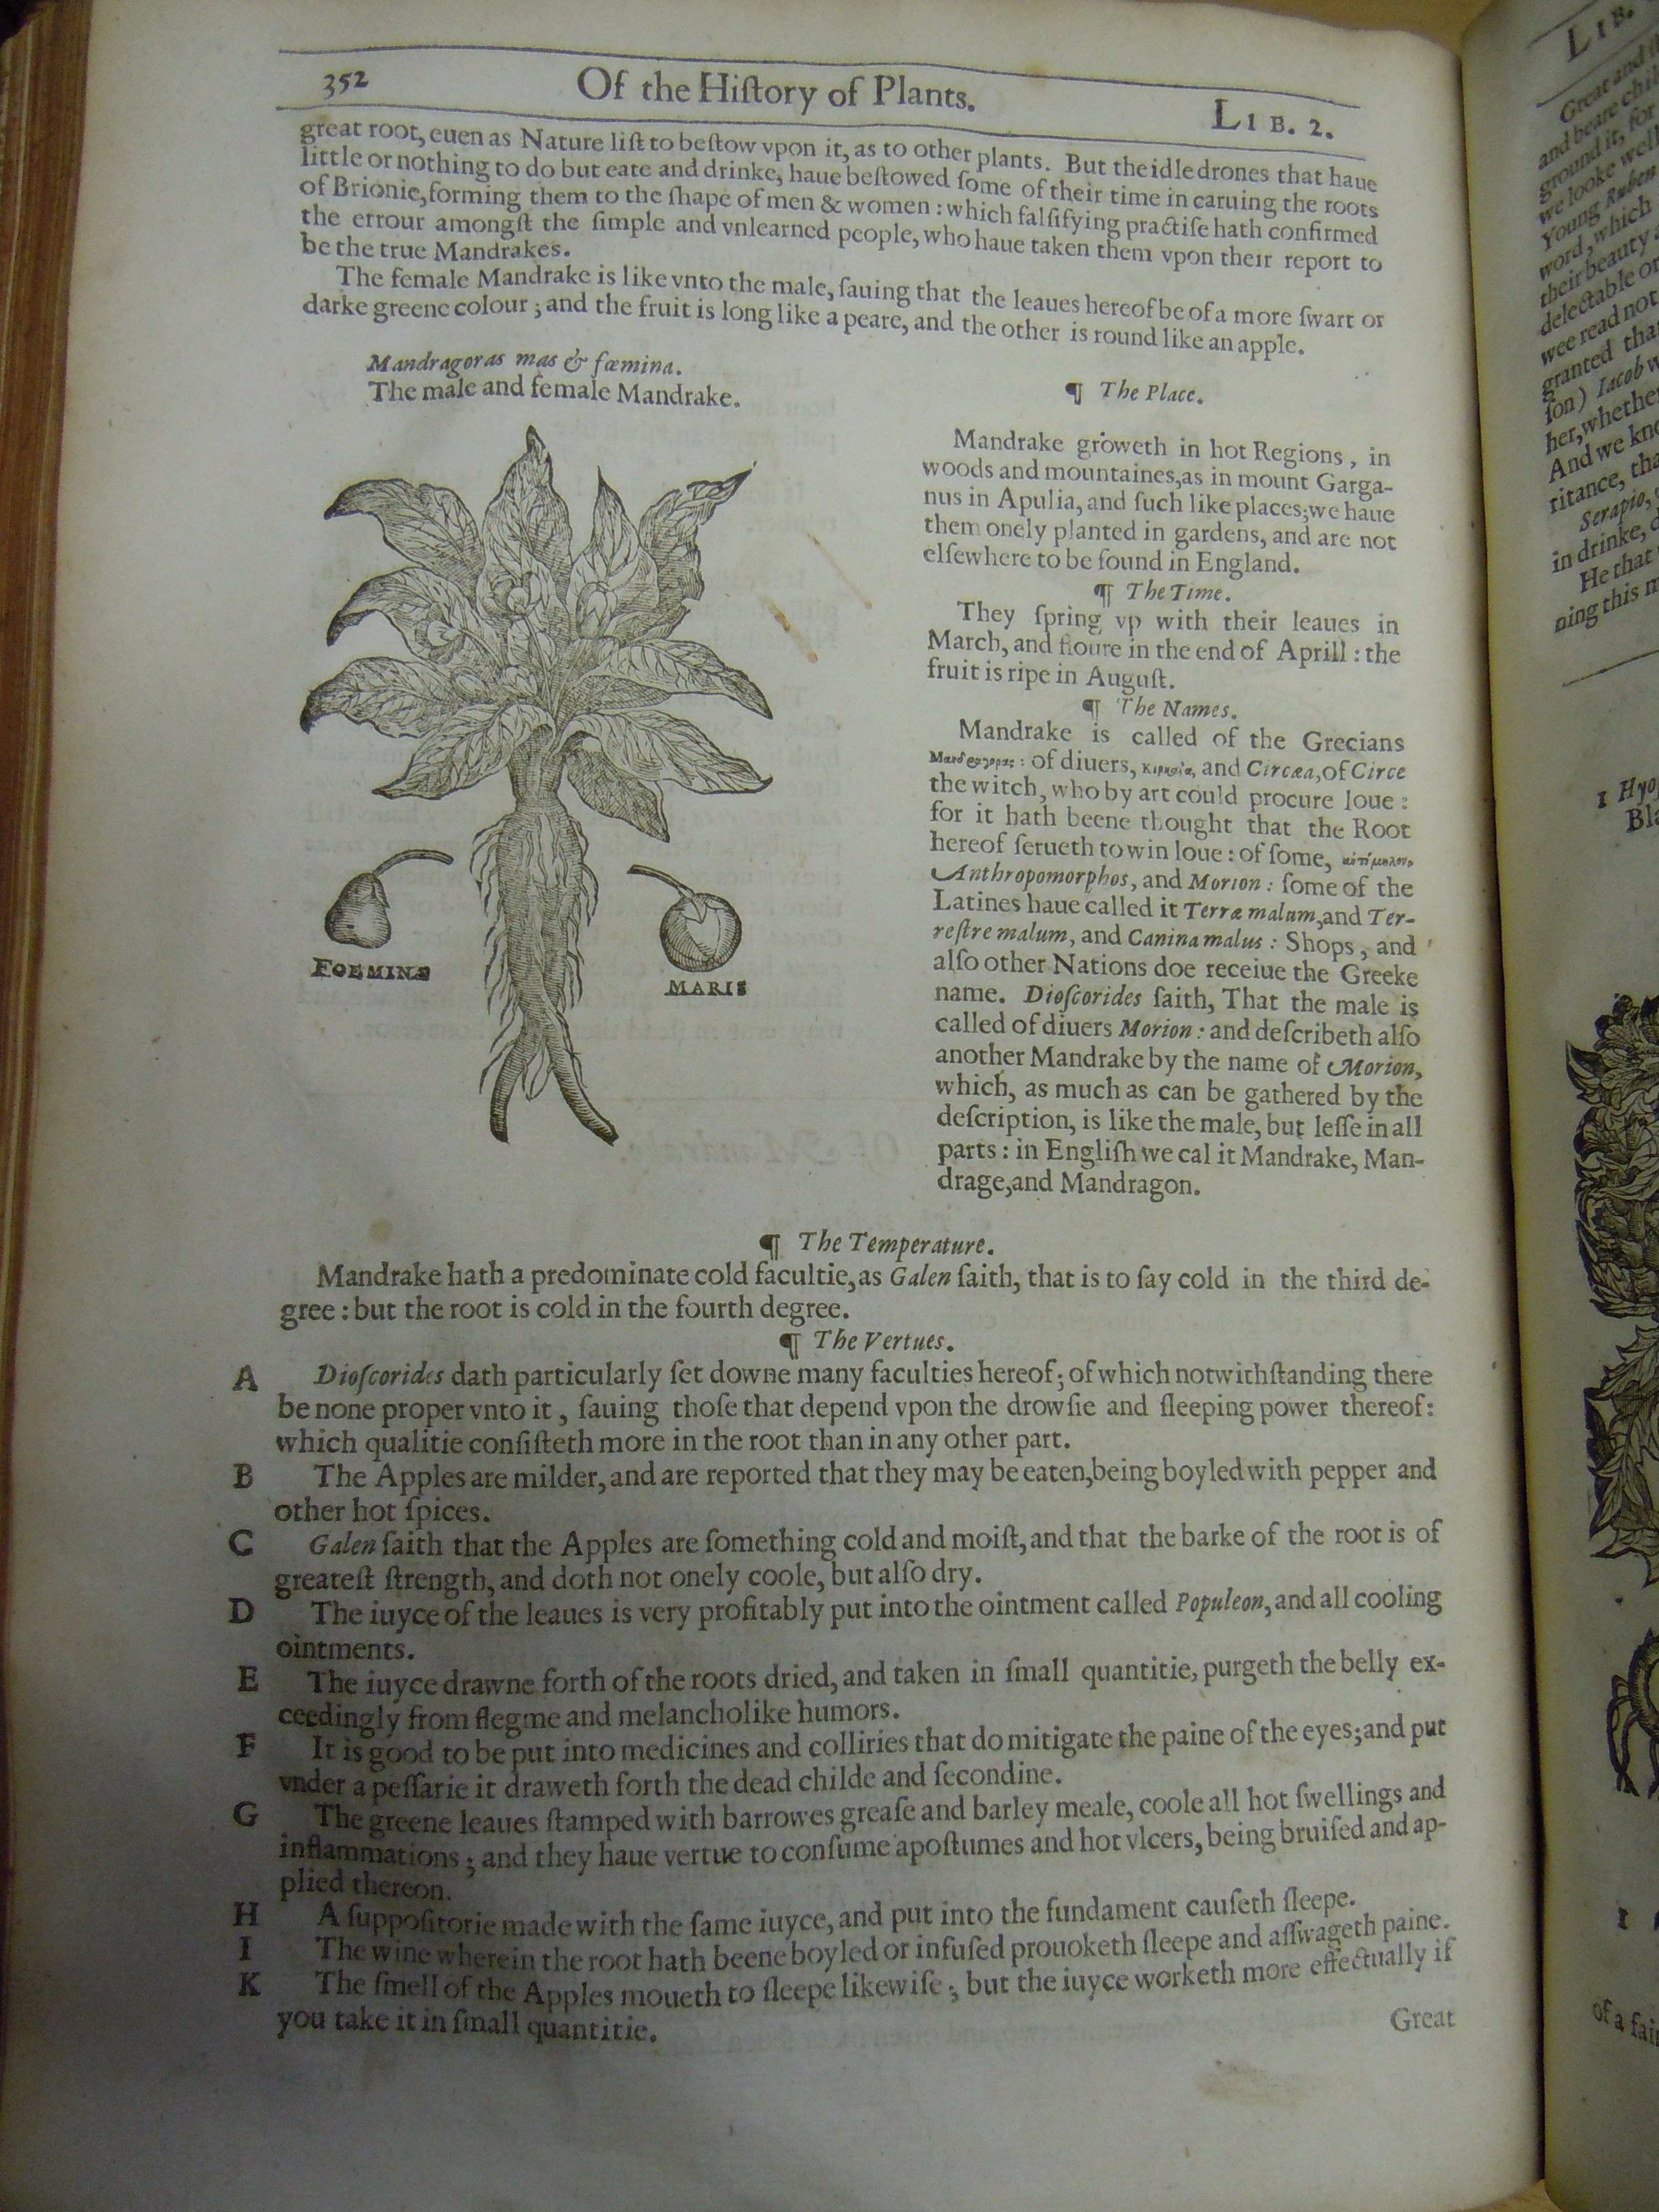 BT3.201.1, p.352, John Gerrard’s The herball (1633)